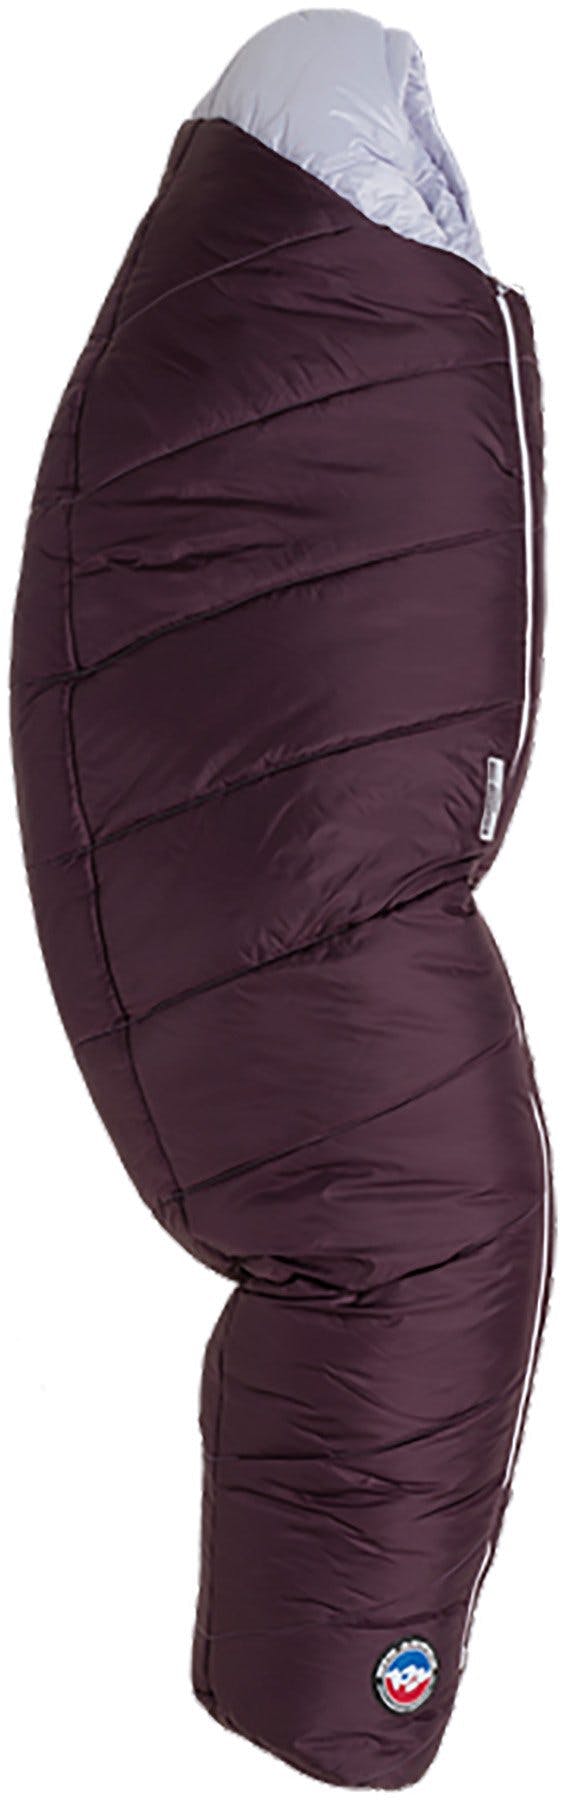 Product image for Sidewinder Camp 20°F/-7°C Short Mummy Sleeping Bag - Women's